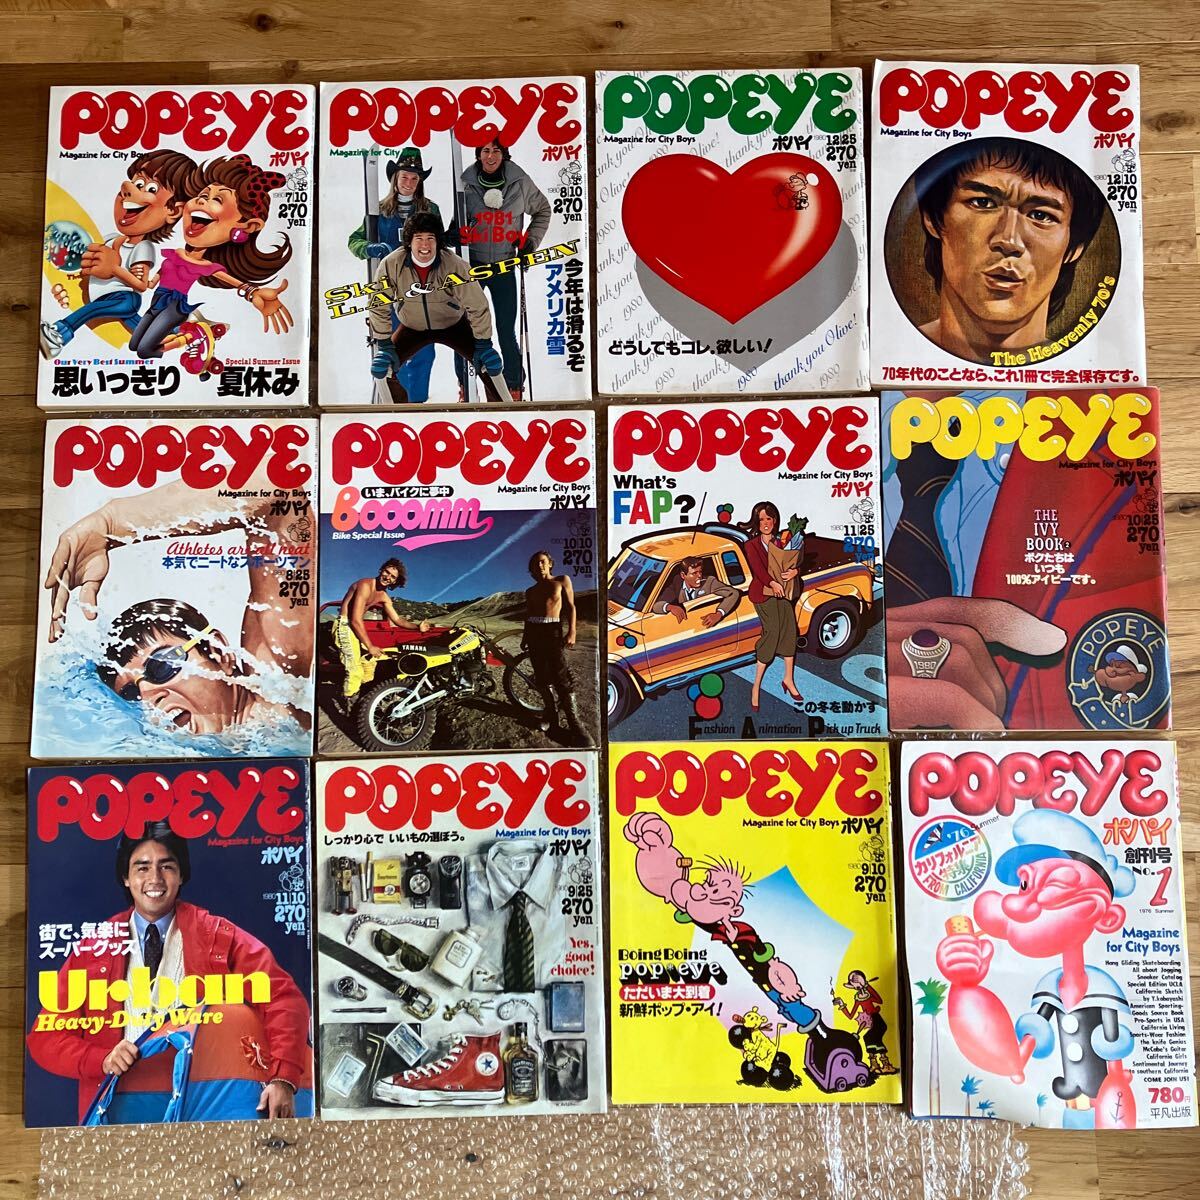 POPEYE Popeye magazine Showa Retro fashion magazine Popeye that time thing .. number set sale rare sub karu